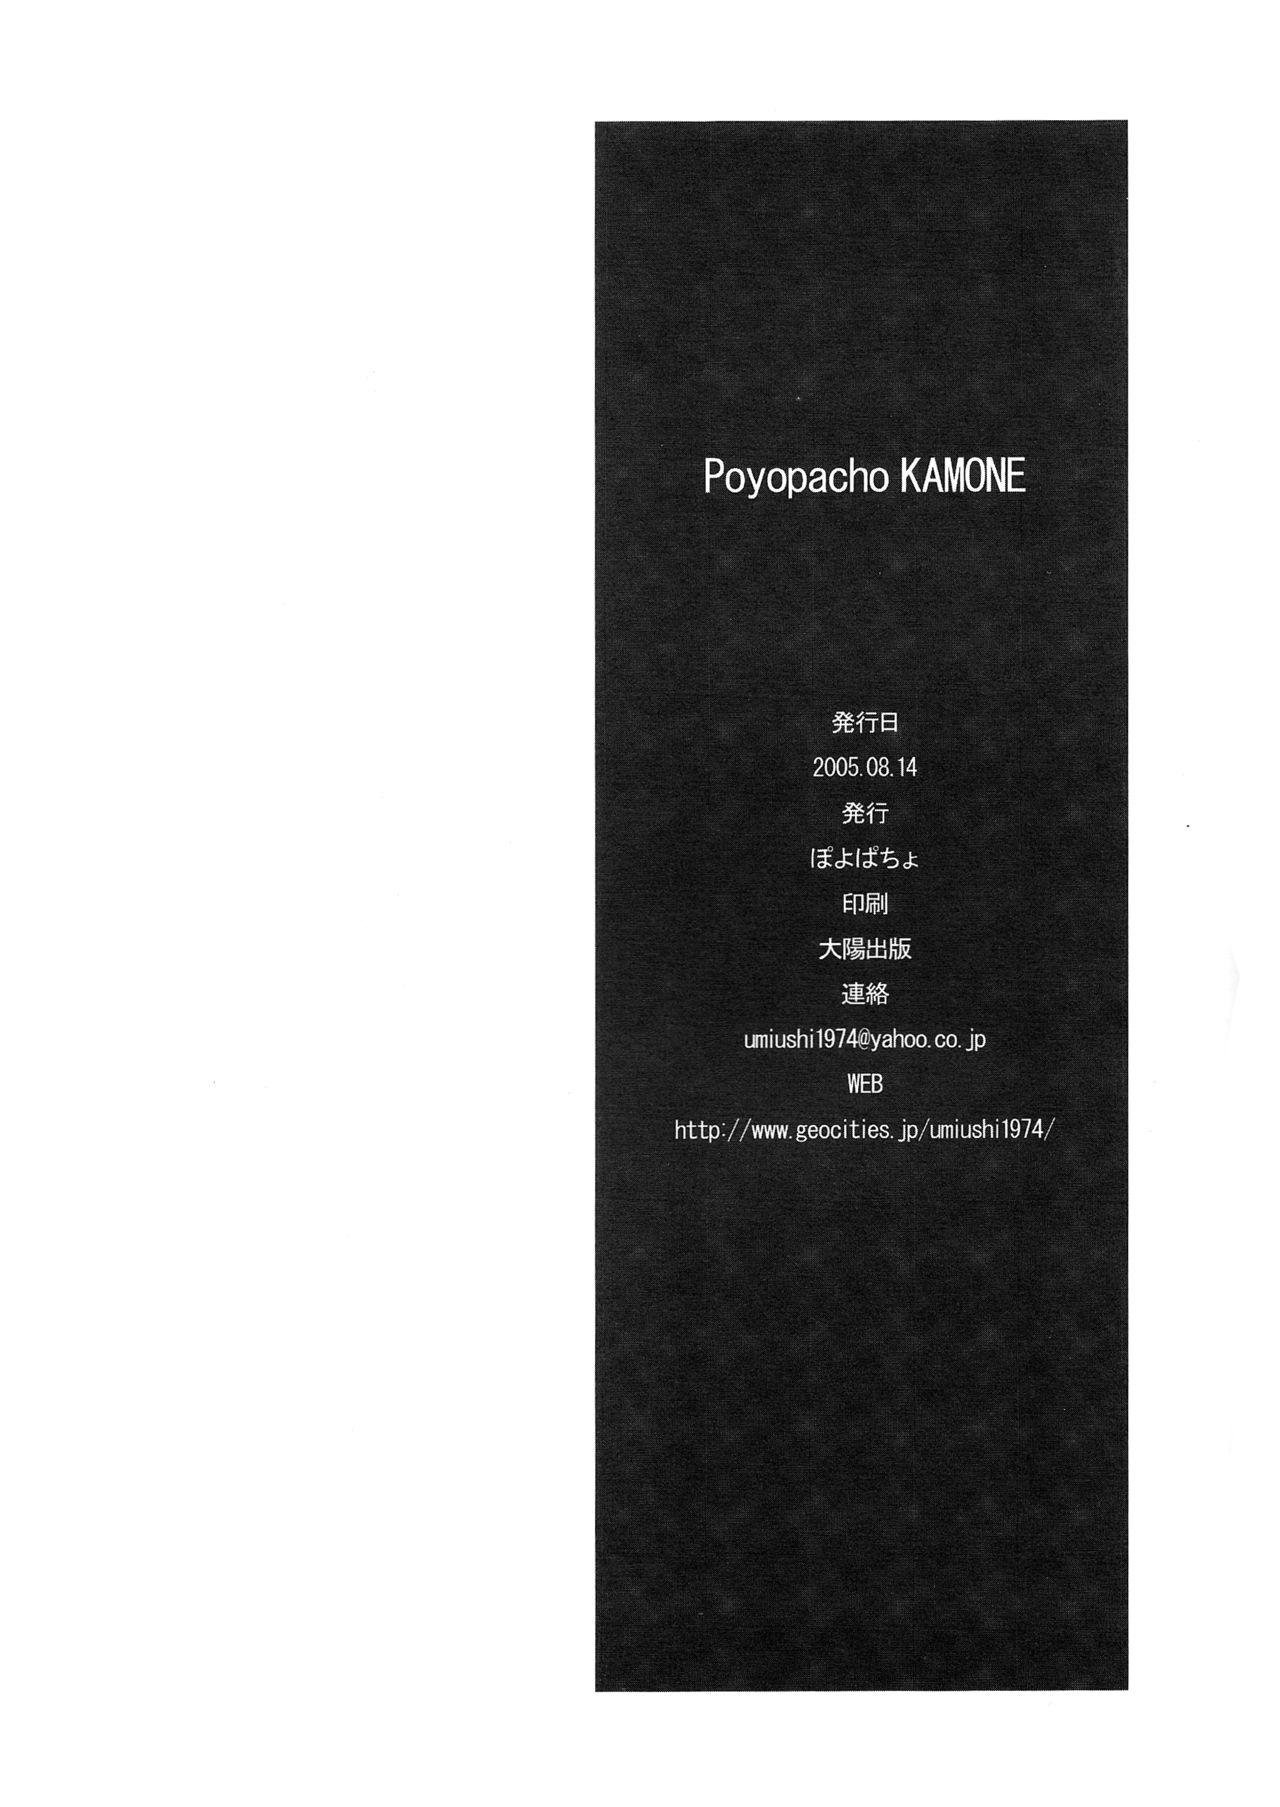 One Poyopacho KAMONE - Eureka 7 Yanks Featured - Page 29